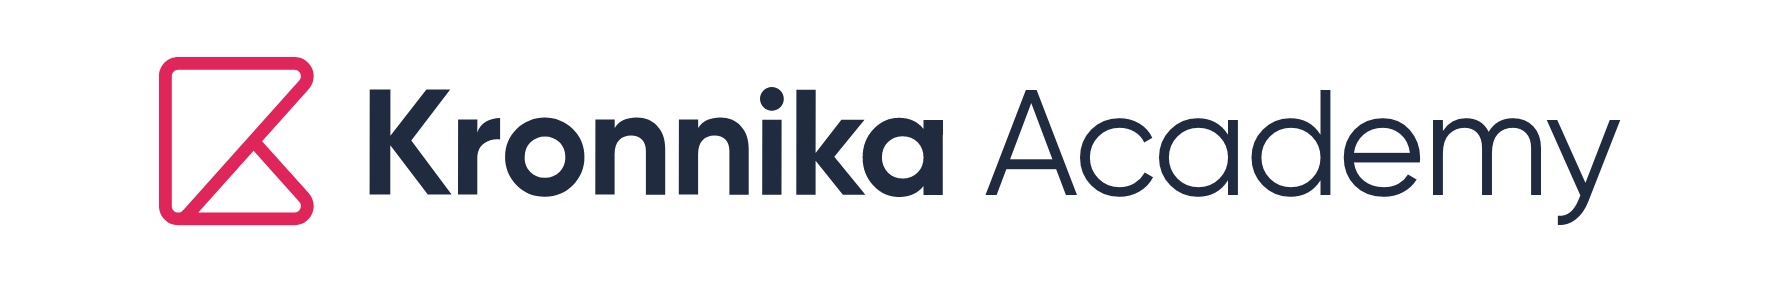 kronnika academy logo